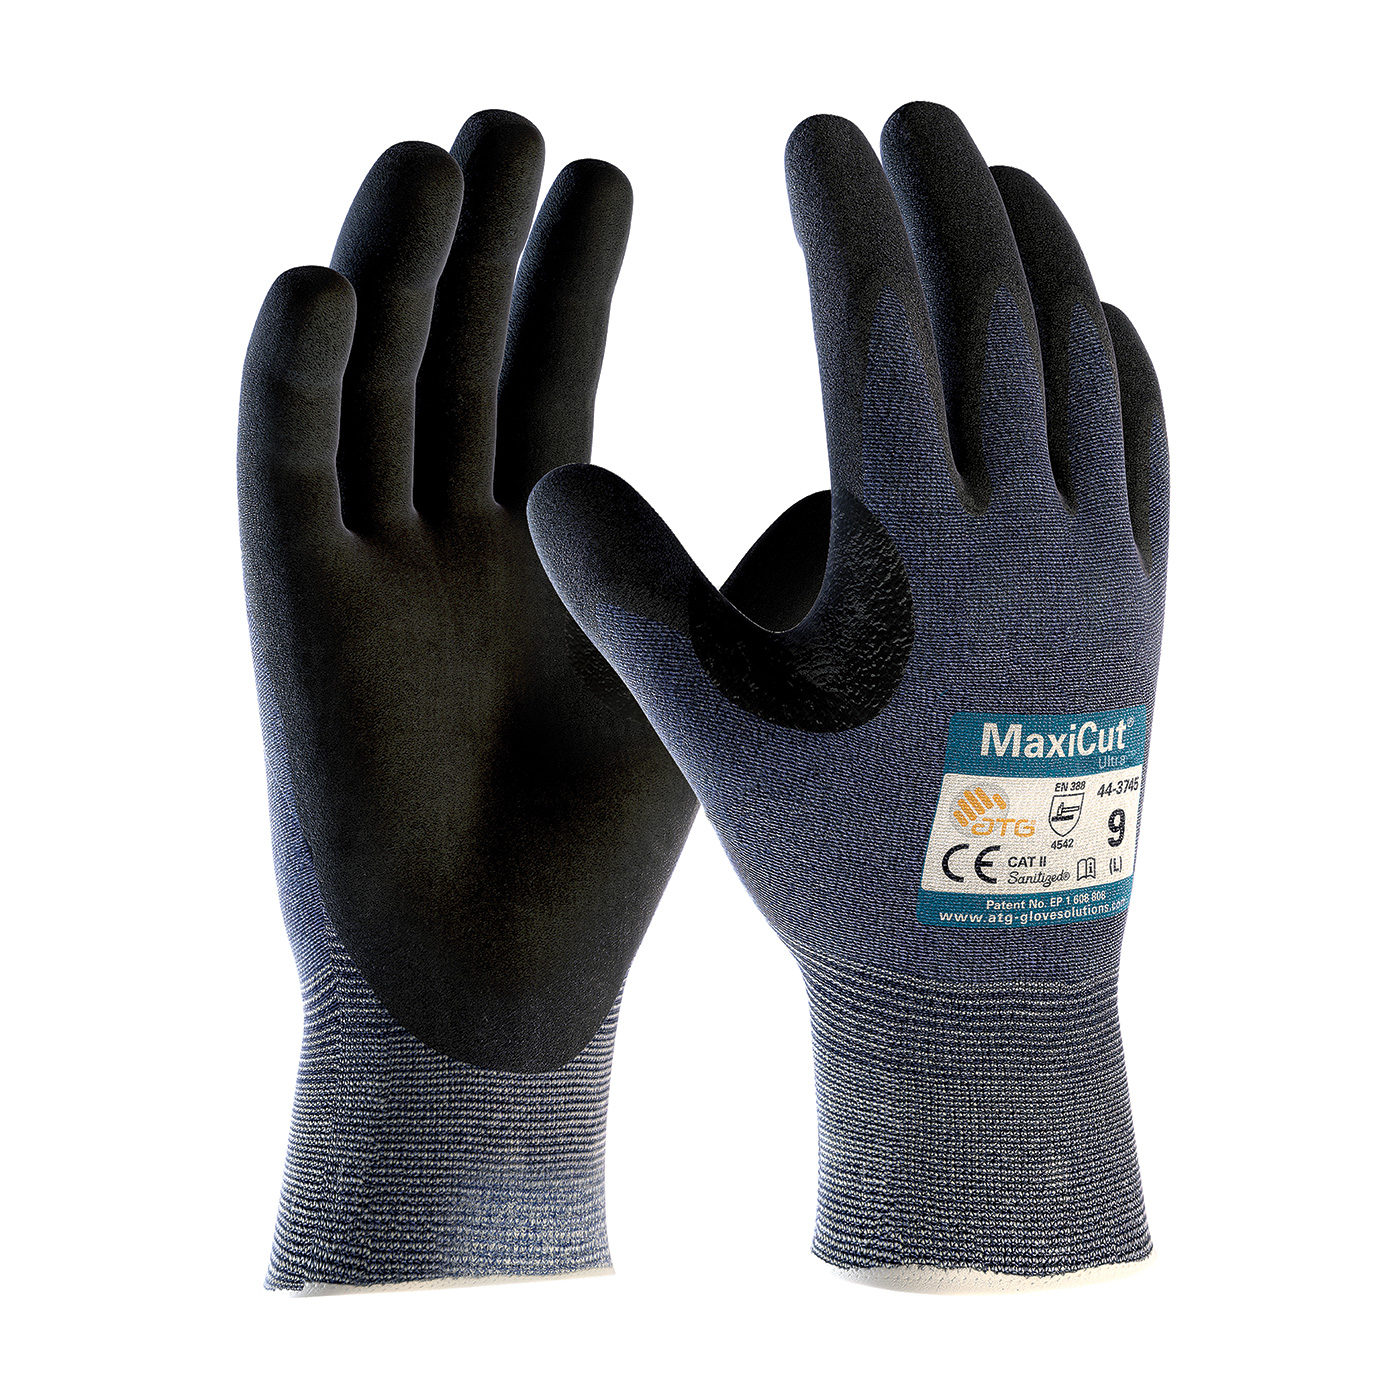 PIP 44-3745/XL MaxiCut Ultra Seamless Knit Engineered Yarn Glove with Premium Nitrile Coated MicroFoam Grip on Palm & Fingers - X-Large PID-44 3745 XL